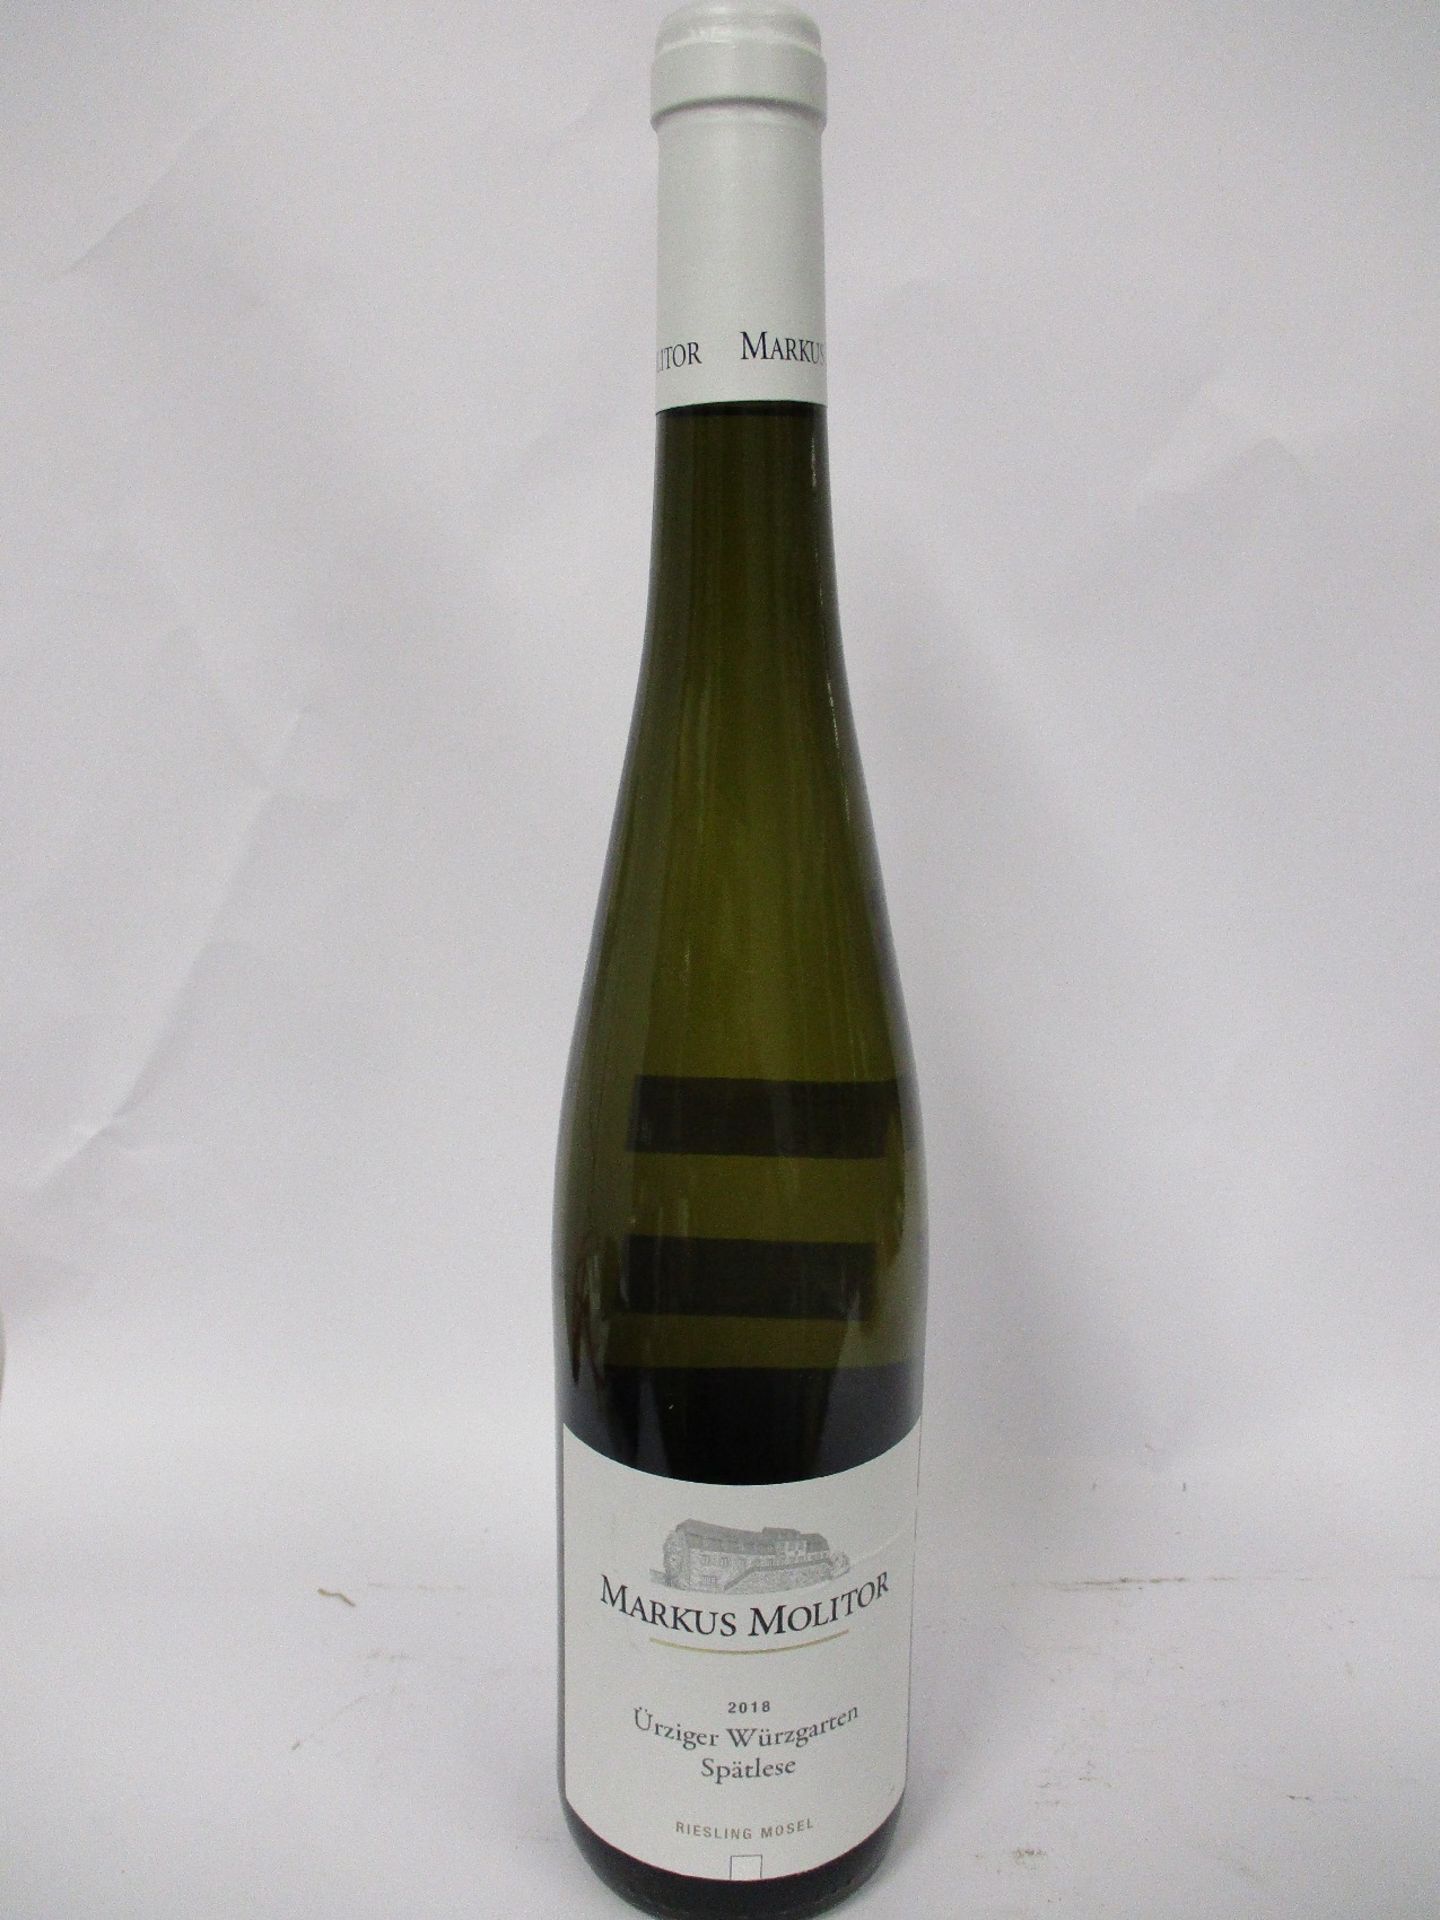 Six bottles of Markus Molitor 2018 Urziger Wurzgarten Spatlese white wine (750ml) (Over 18s only).